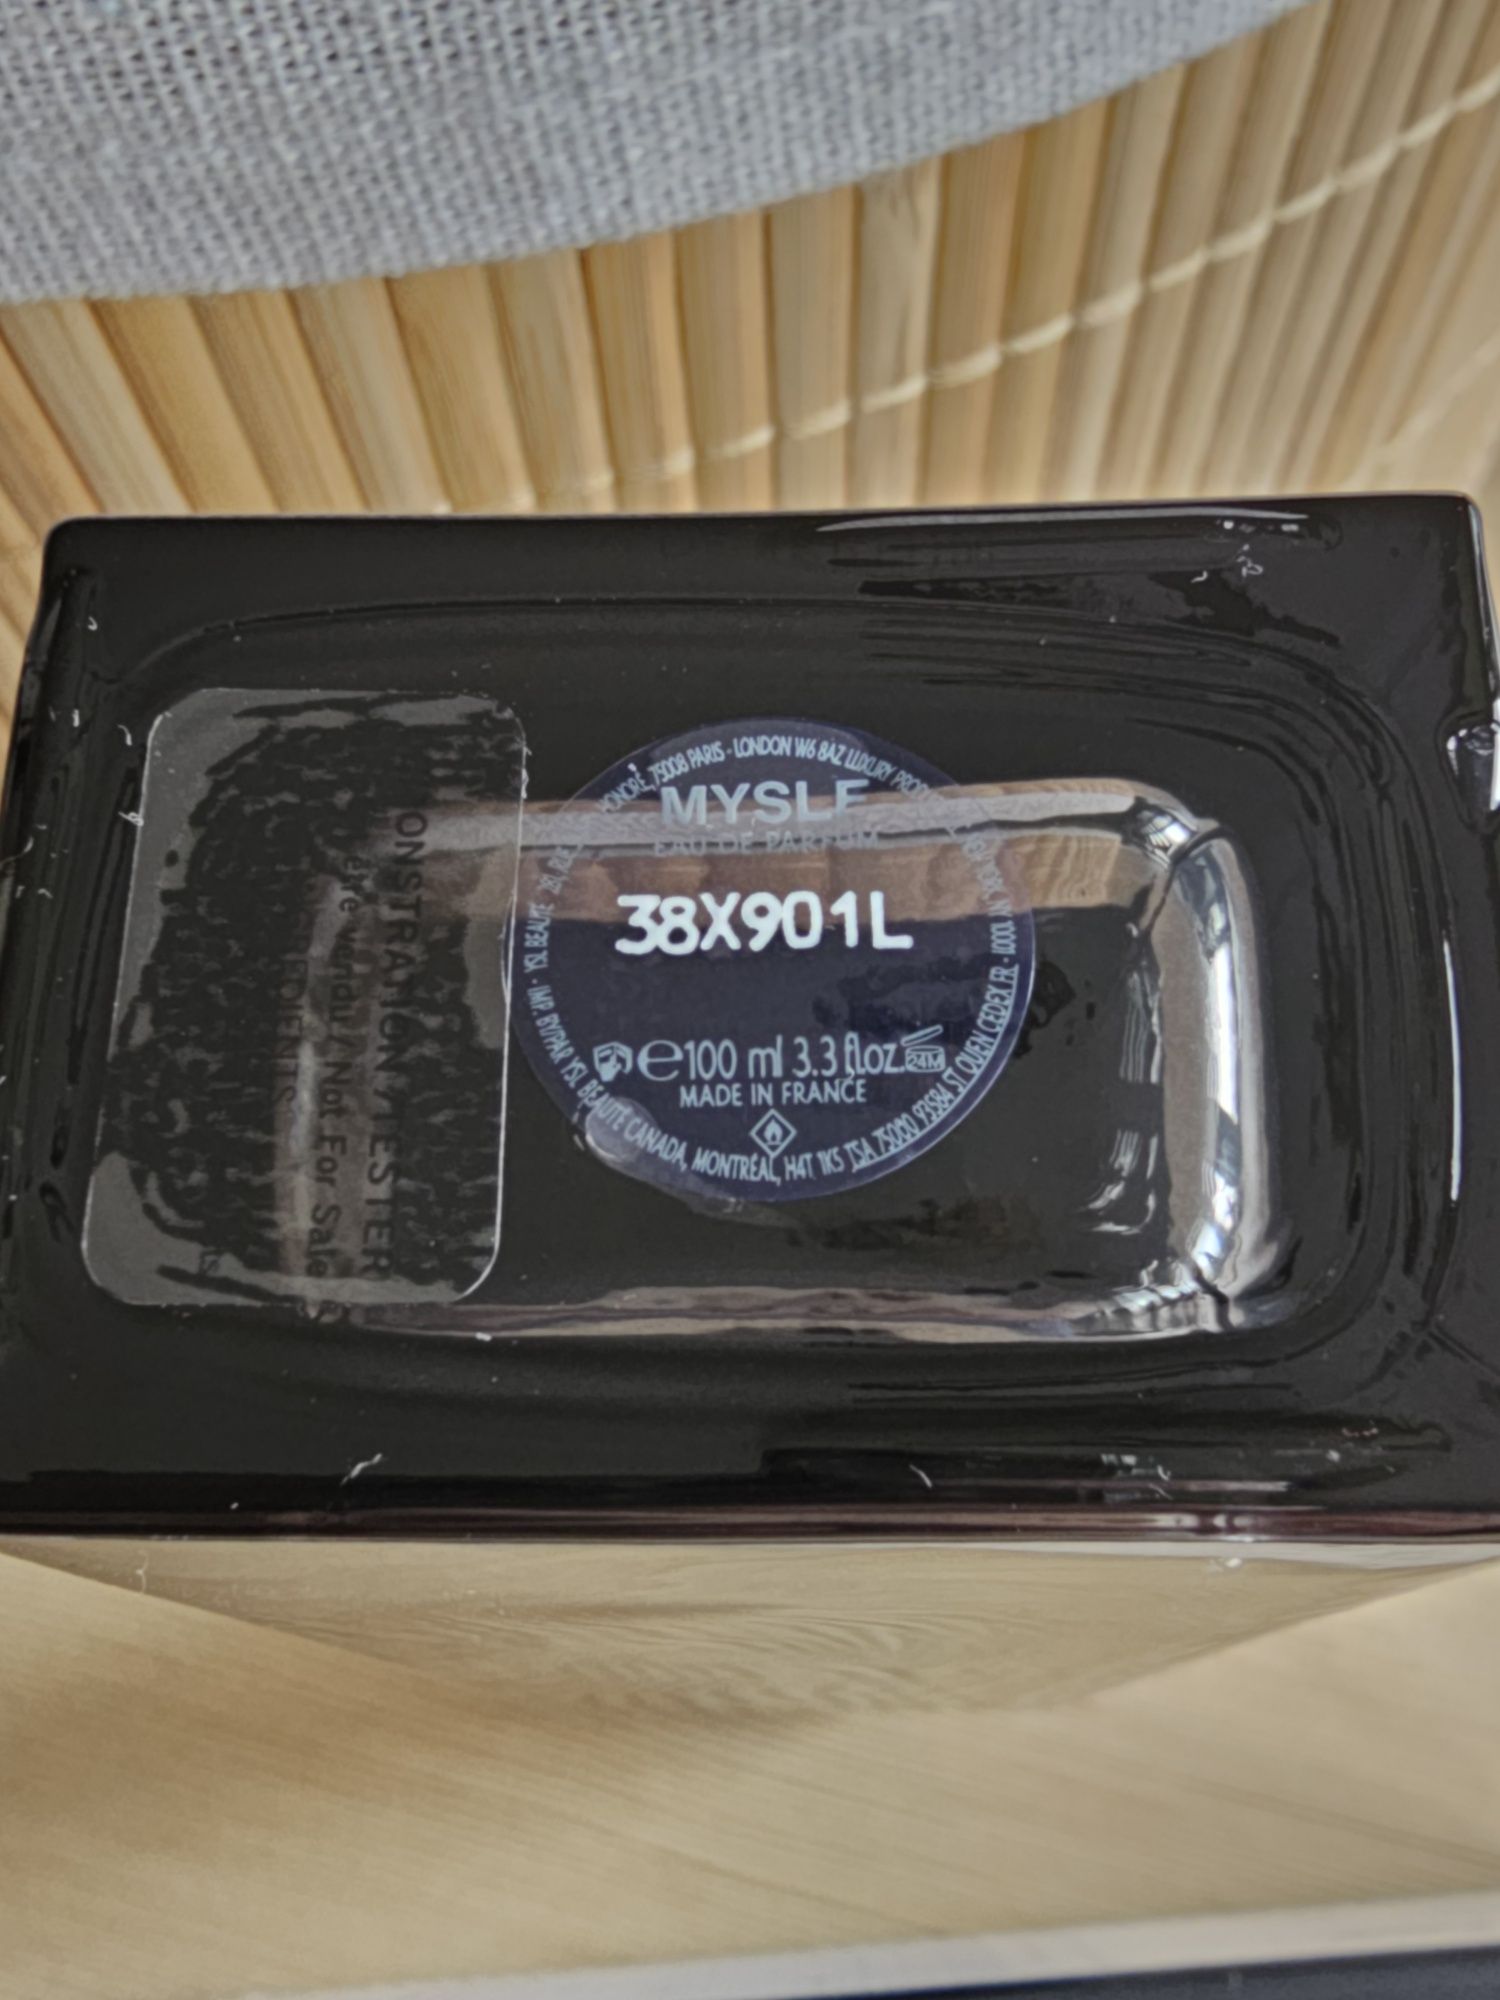 YSL Ives Saint Laurent - MYSLF - 100 ml, męska woda perfumowana.